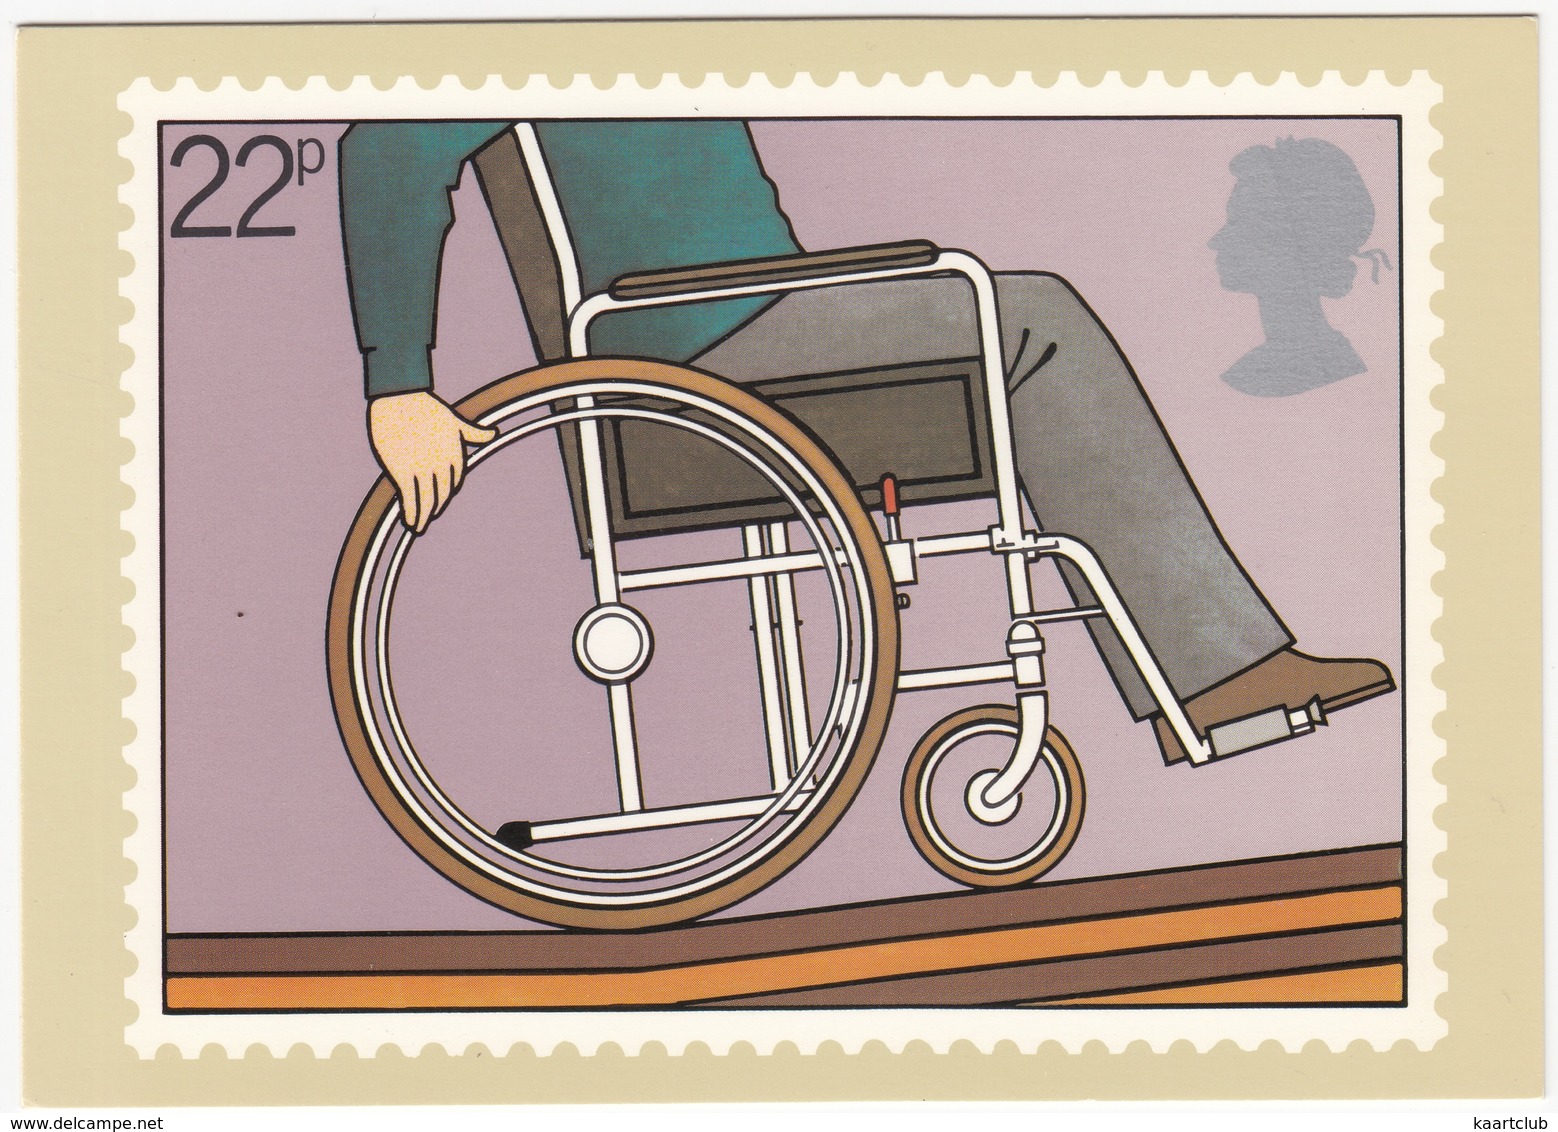 Person In Wheelchair - (22p Stamp) - International Year Of Disabled People - 1981 - (U.K.) - Postzegels (afbeeldingen)